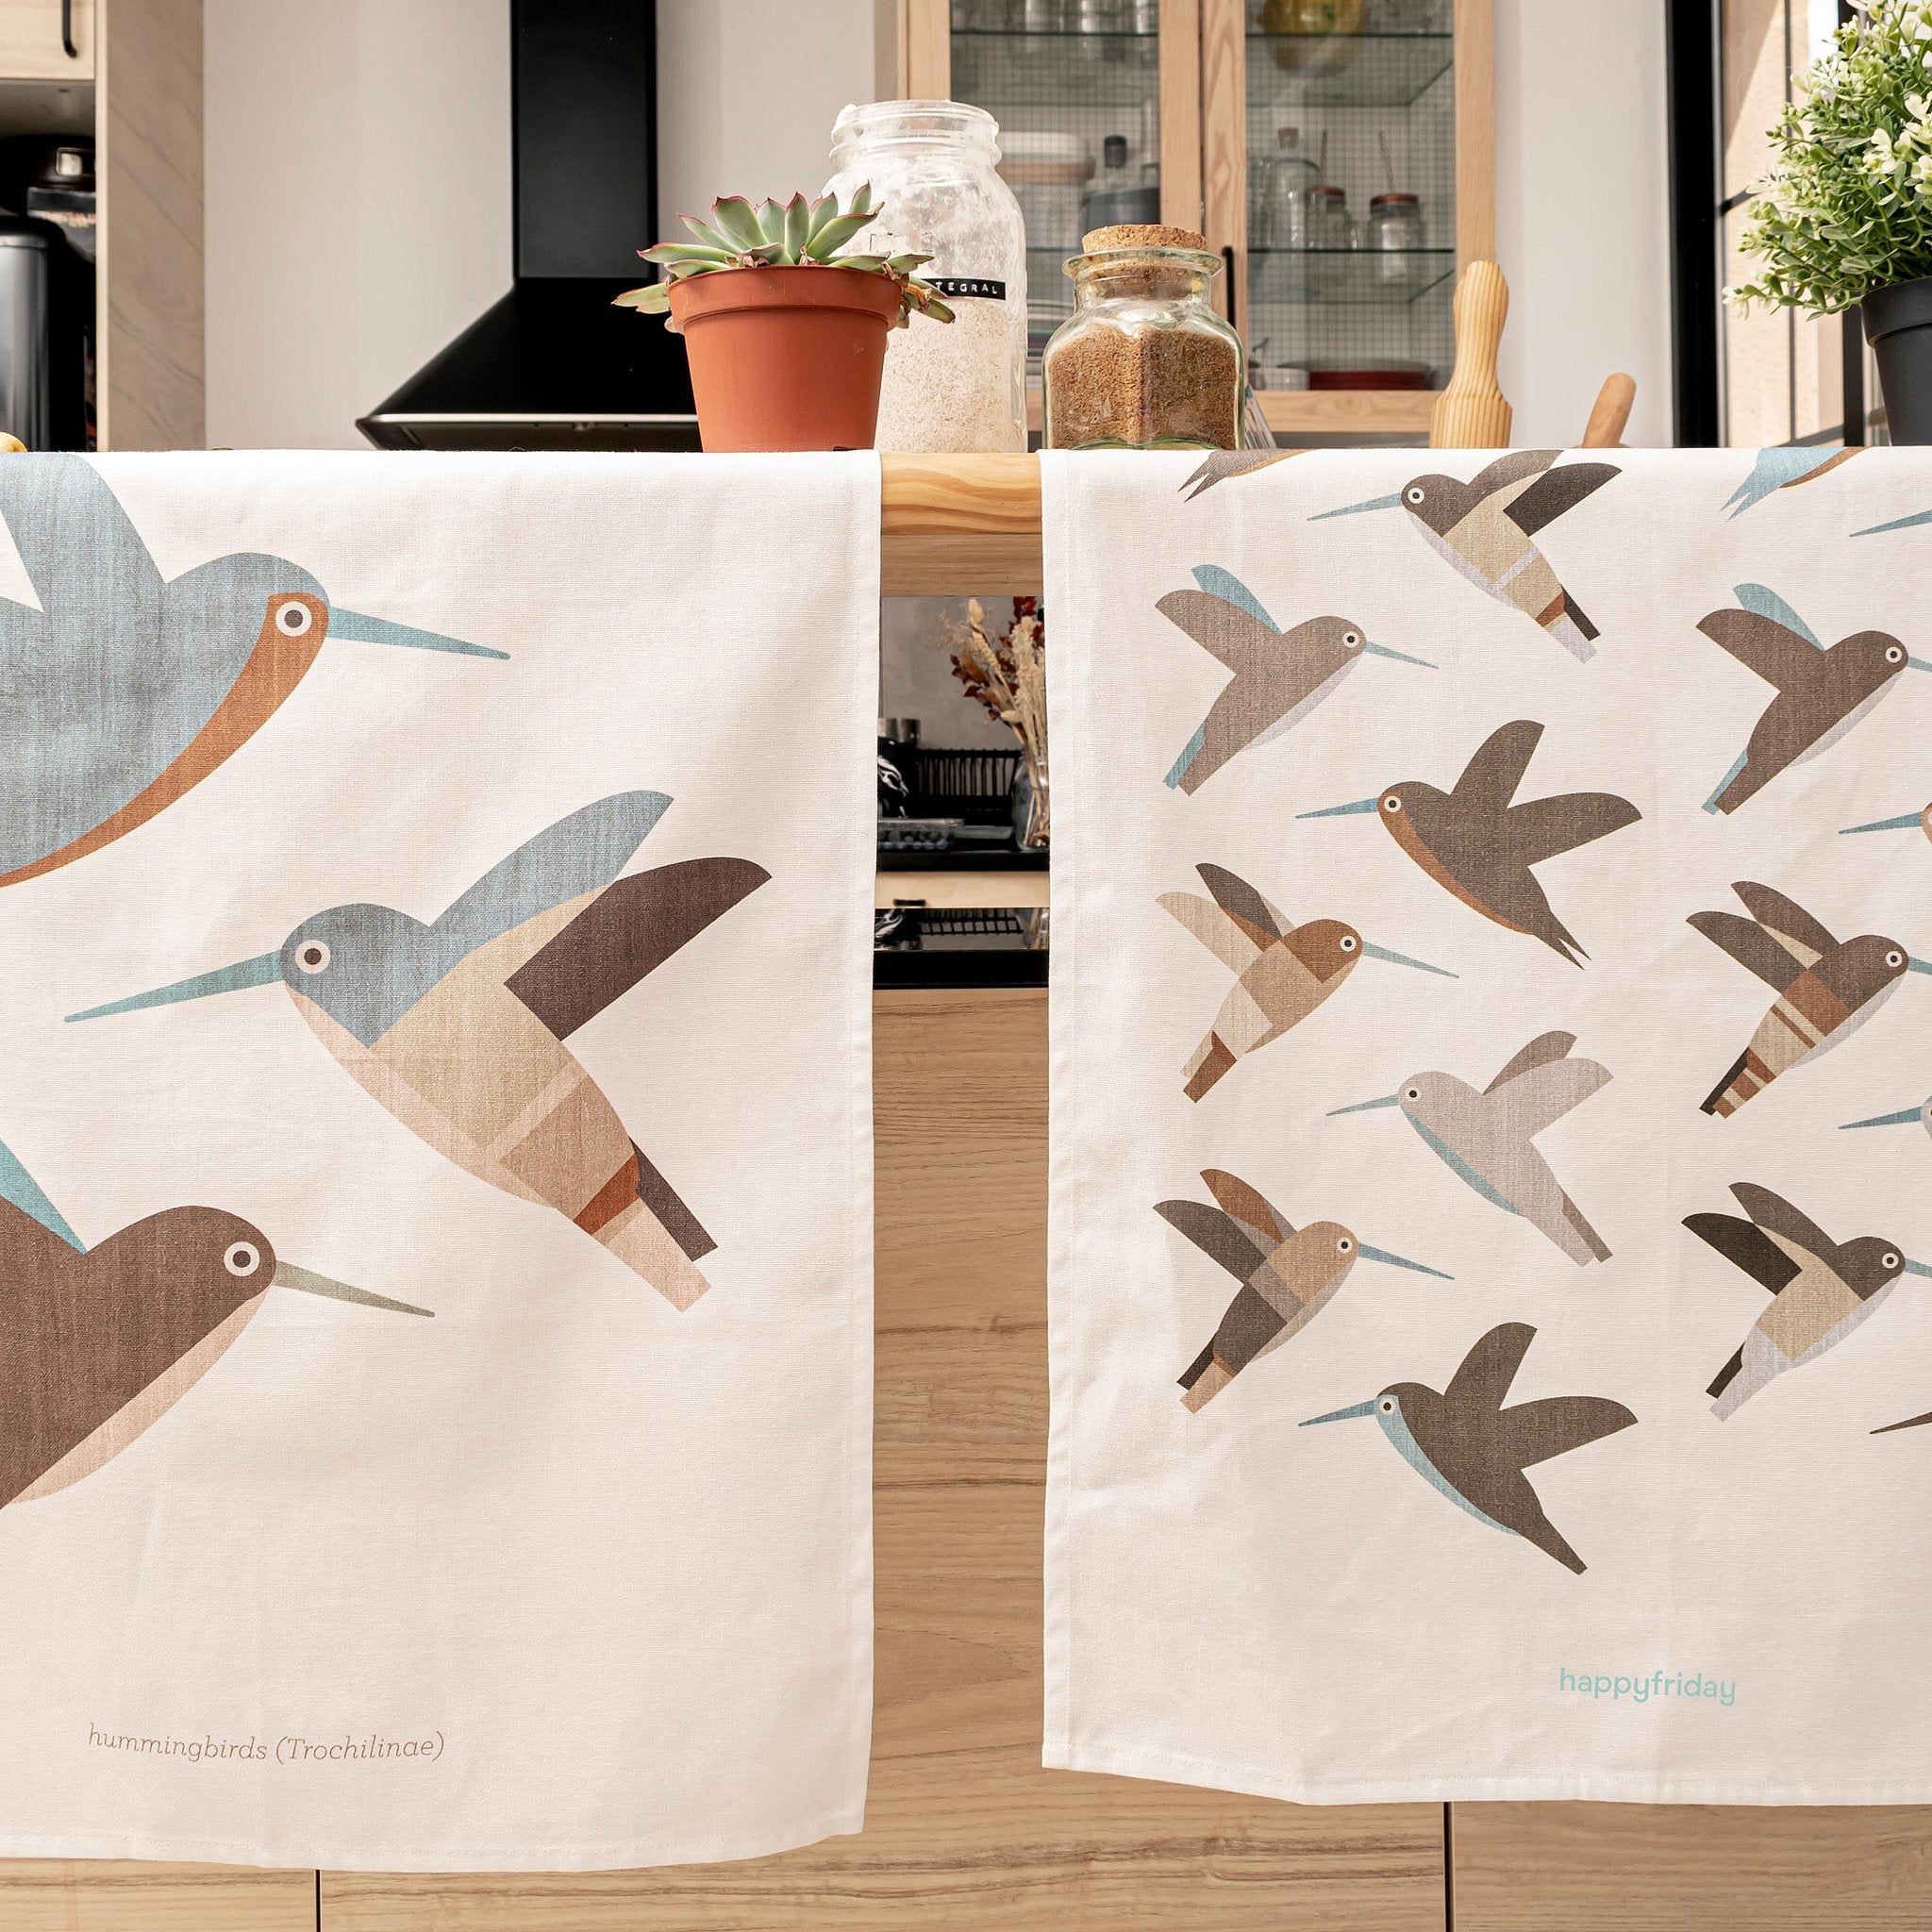 Happy Friday Tea towel (2 pc) Colibri delphinae 70x50 cm Multicolor